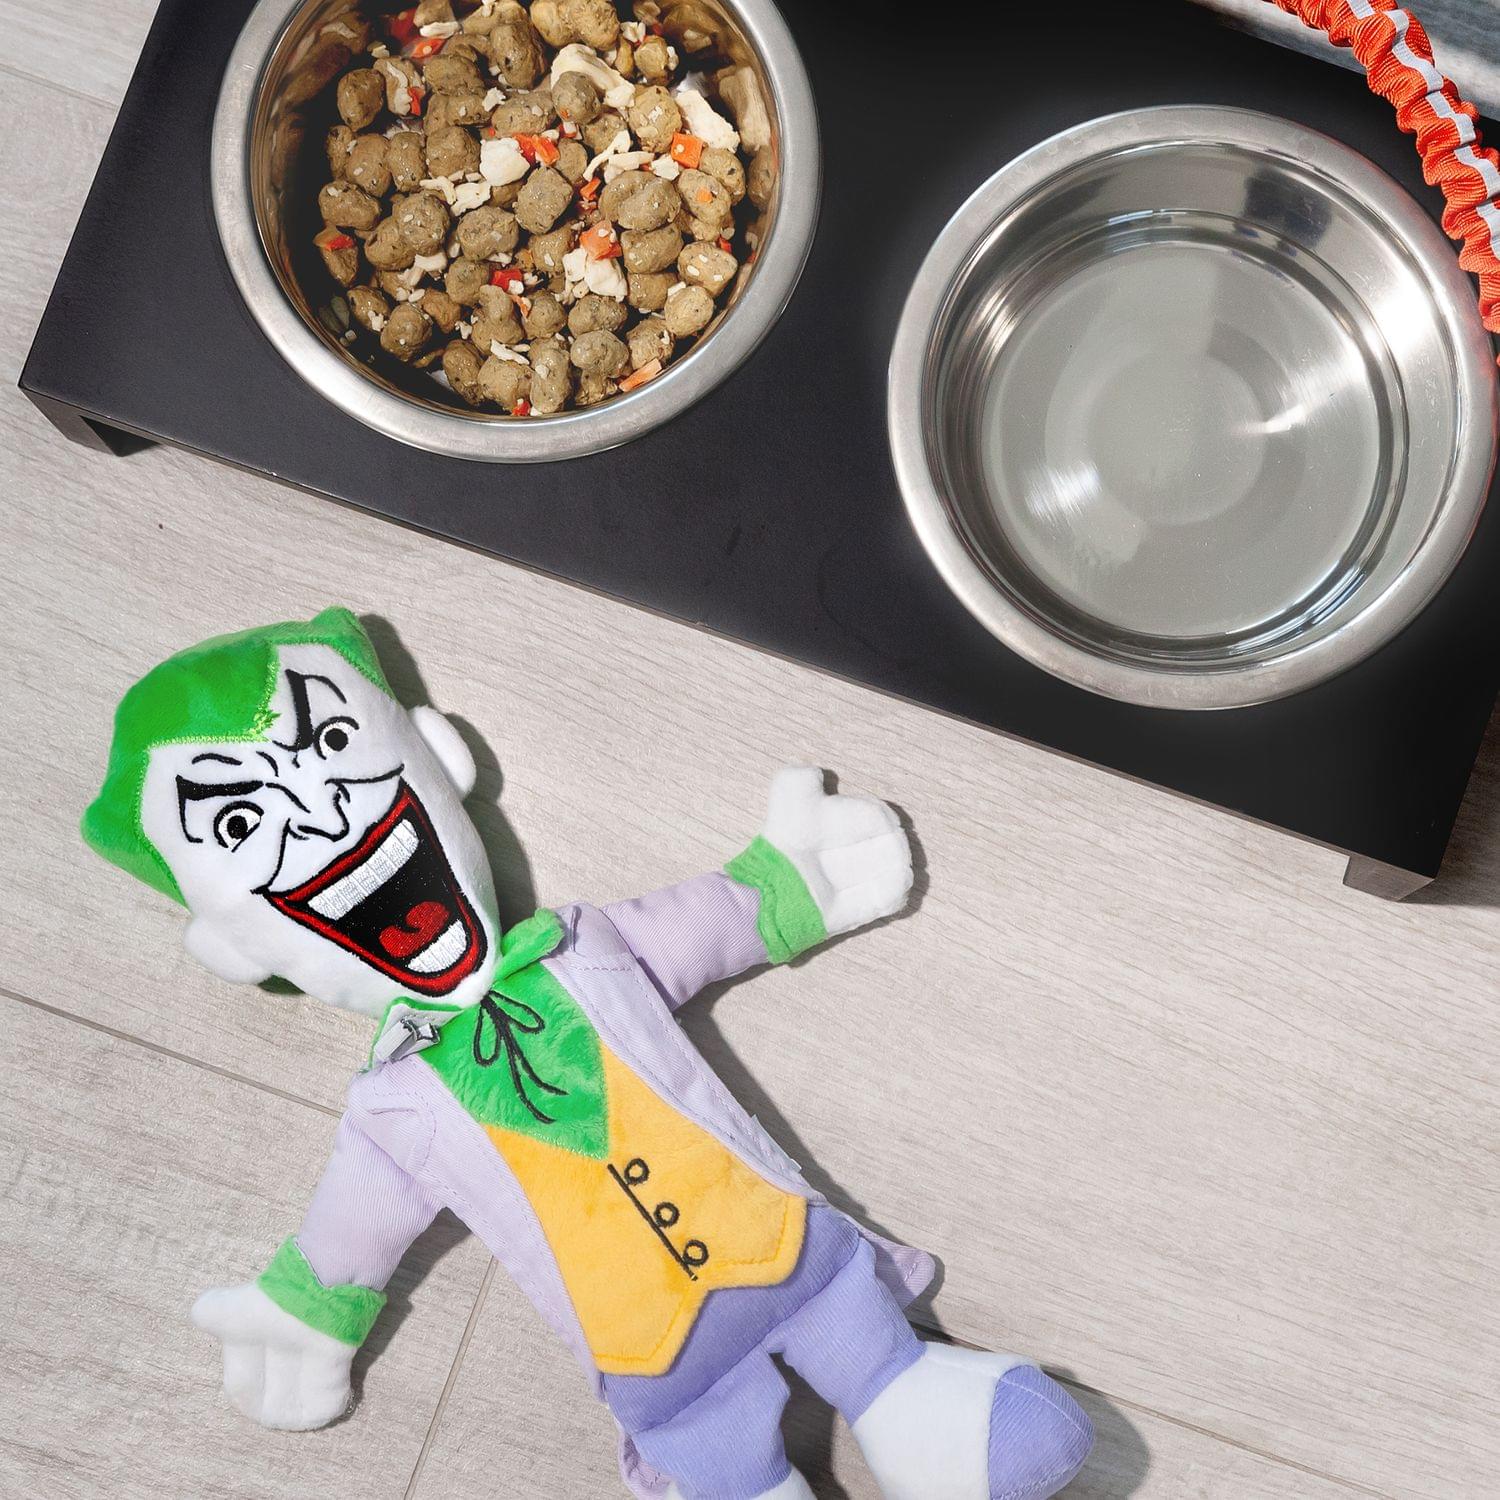 DC Comics The Joker 13 Inch Plush Squeaker Dog Chew Toy